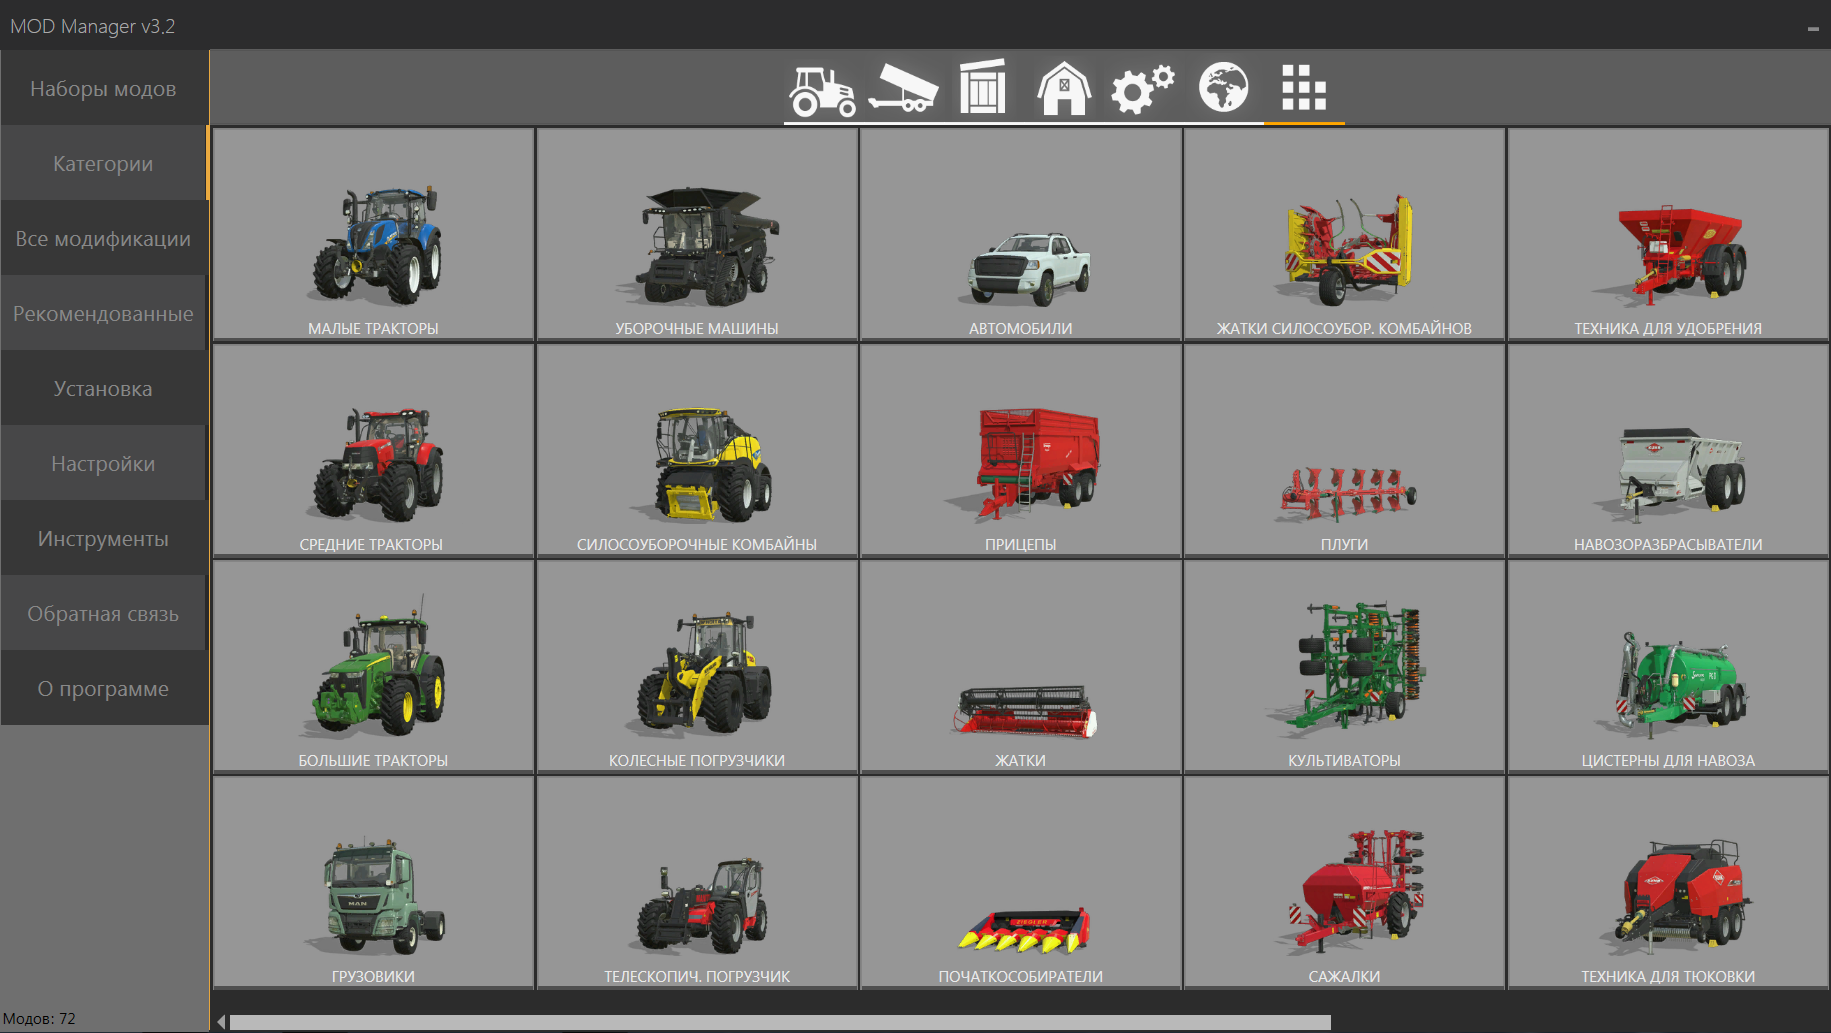 Версию 0 3 7. Farming Simulator 19 менеджер модов. Мод менеджер для ФС 22. Мод менеджер для Farming Simulator 2019. Программа про моду.